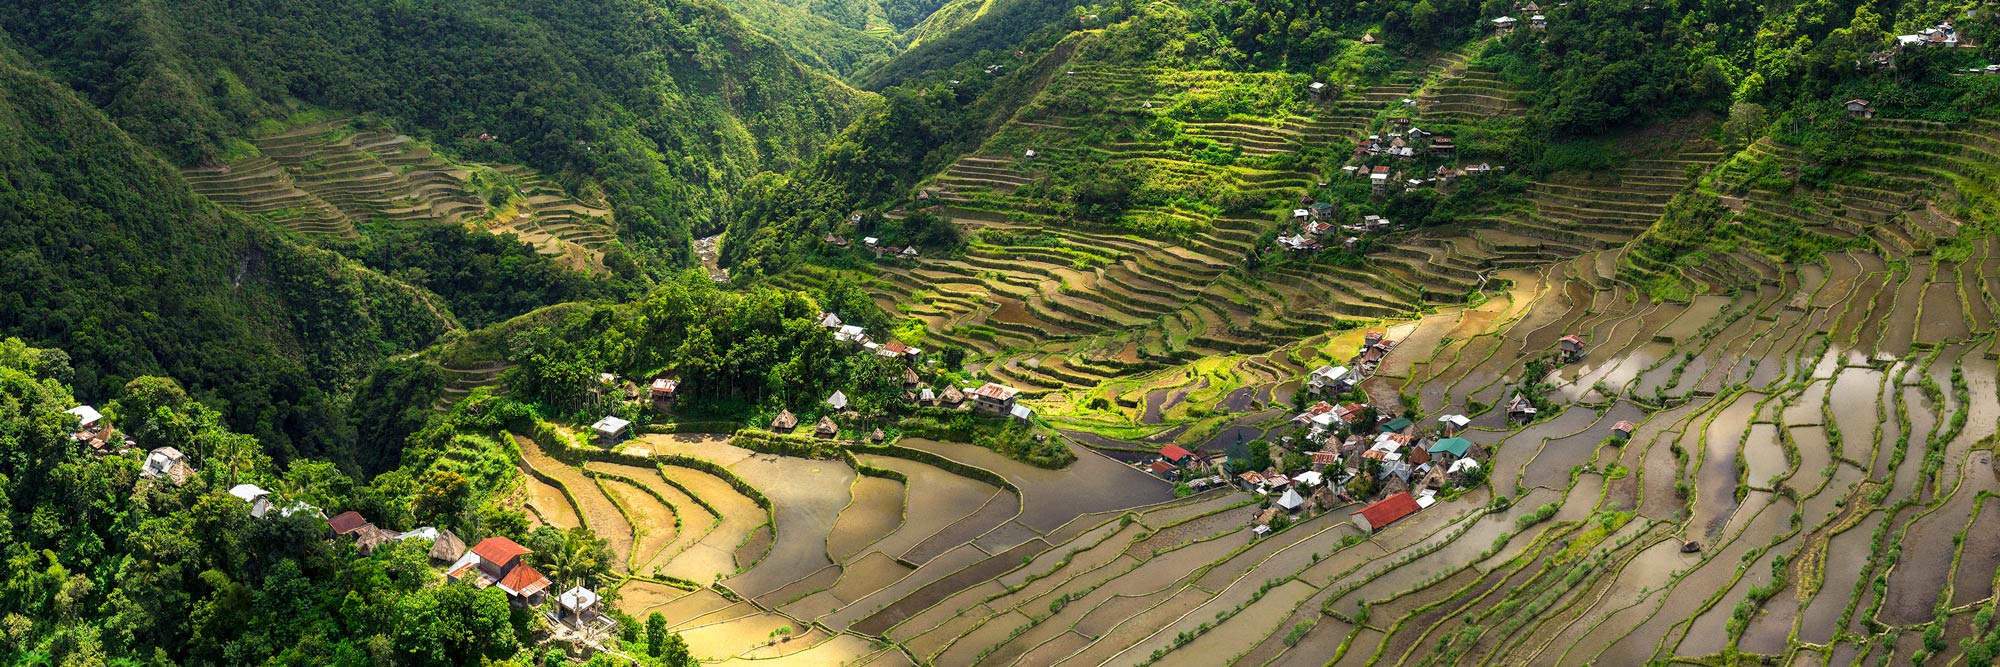 Philippines rice terrace